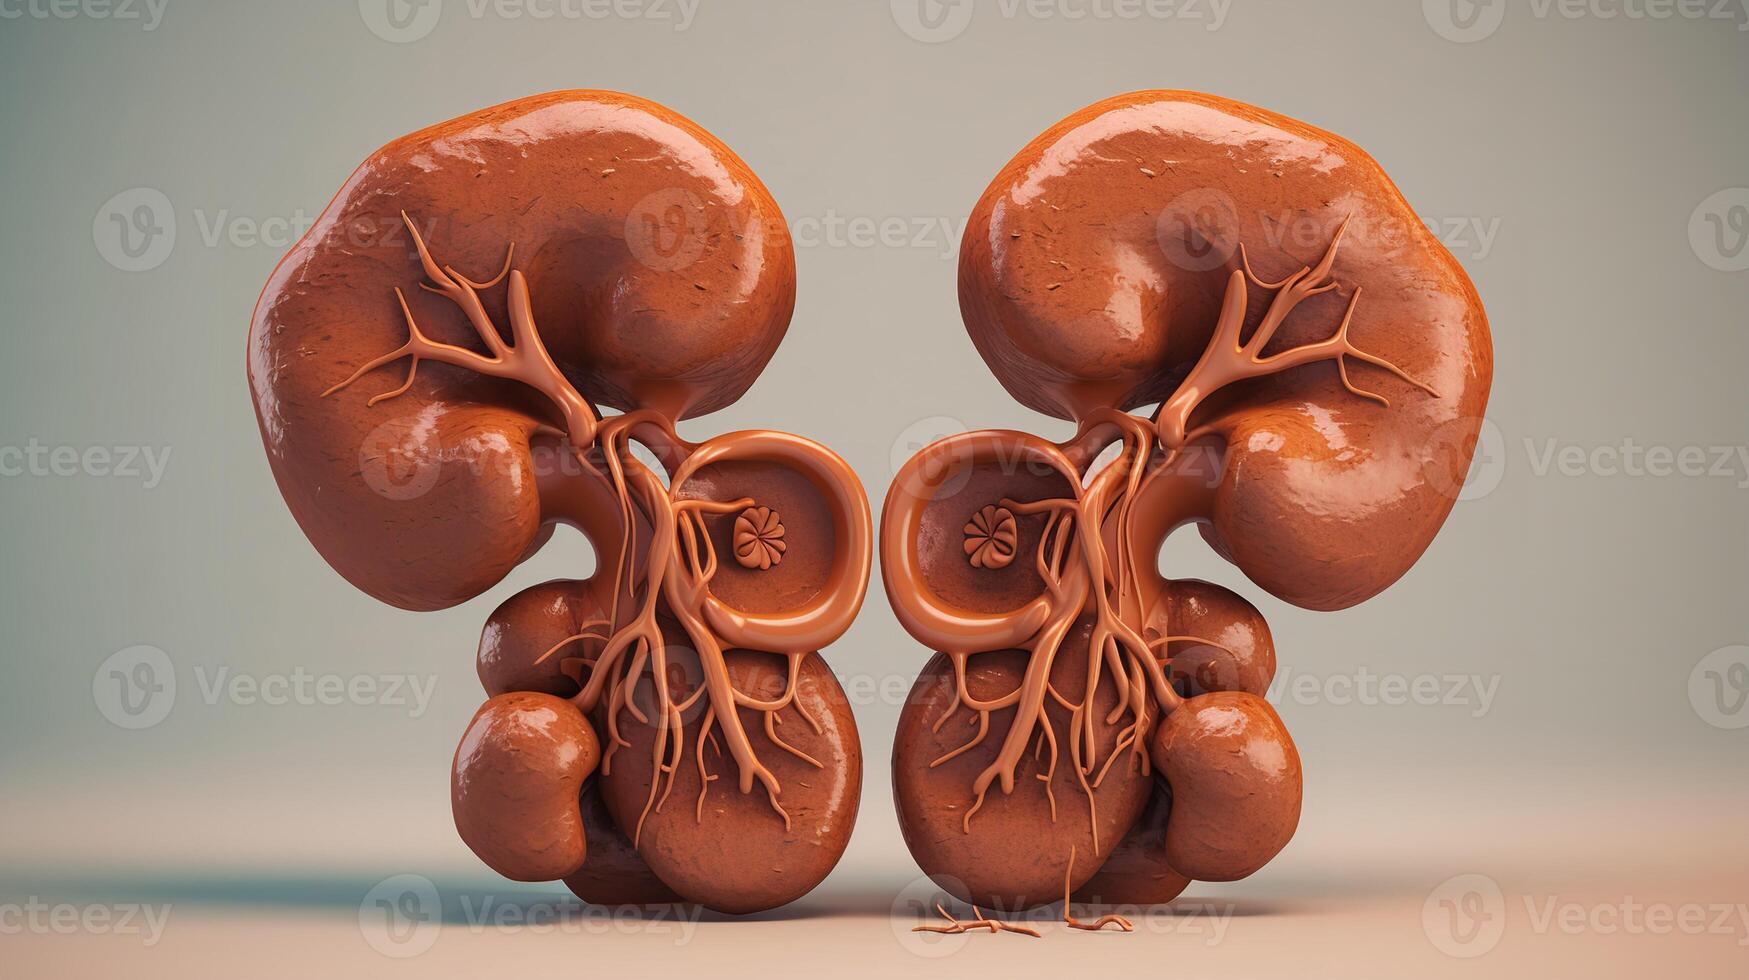 3D Illustration of Human Kidneys for Medical Education photo